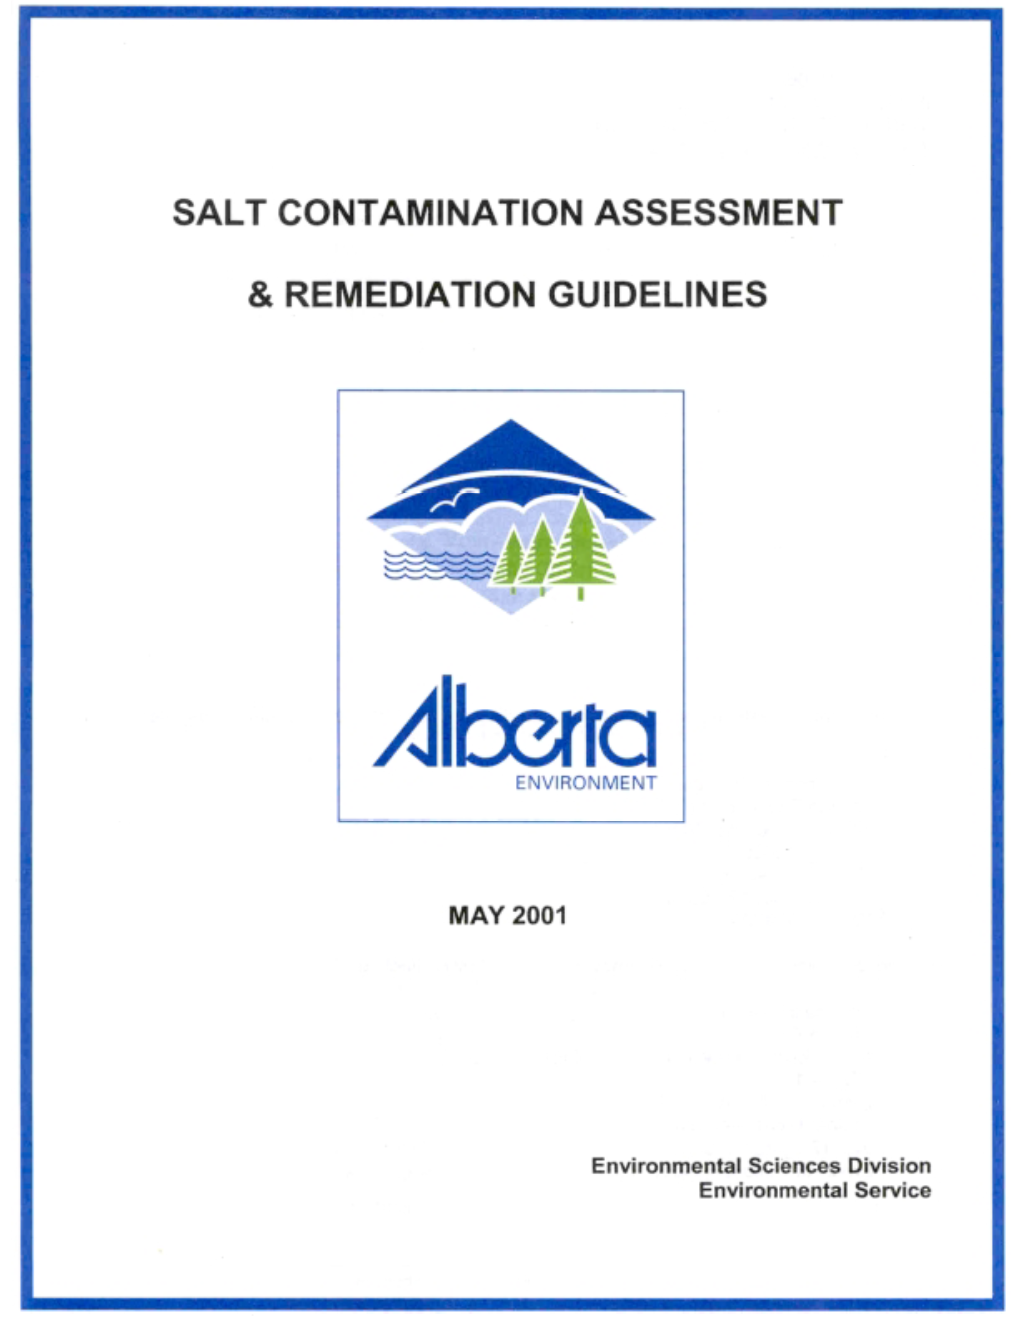 Salt Contamination Assessment & Remediation Guidelines